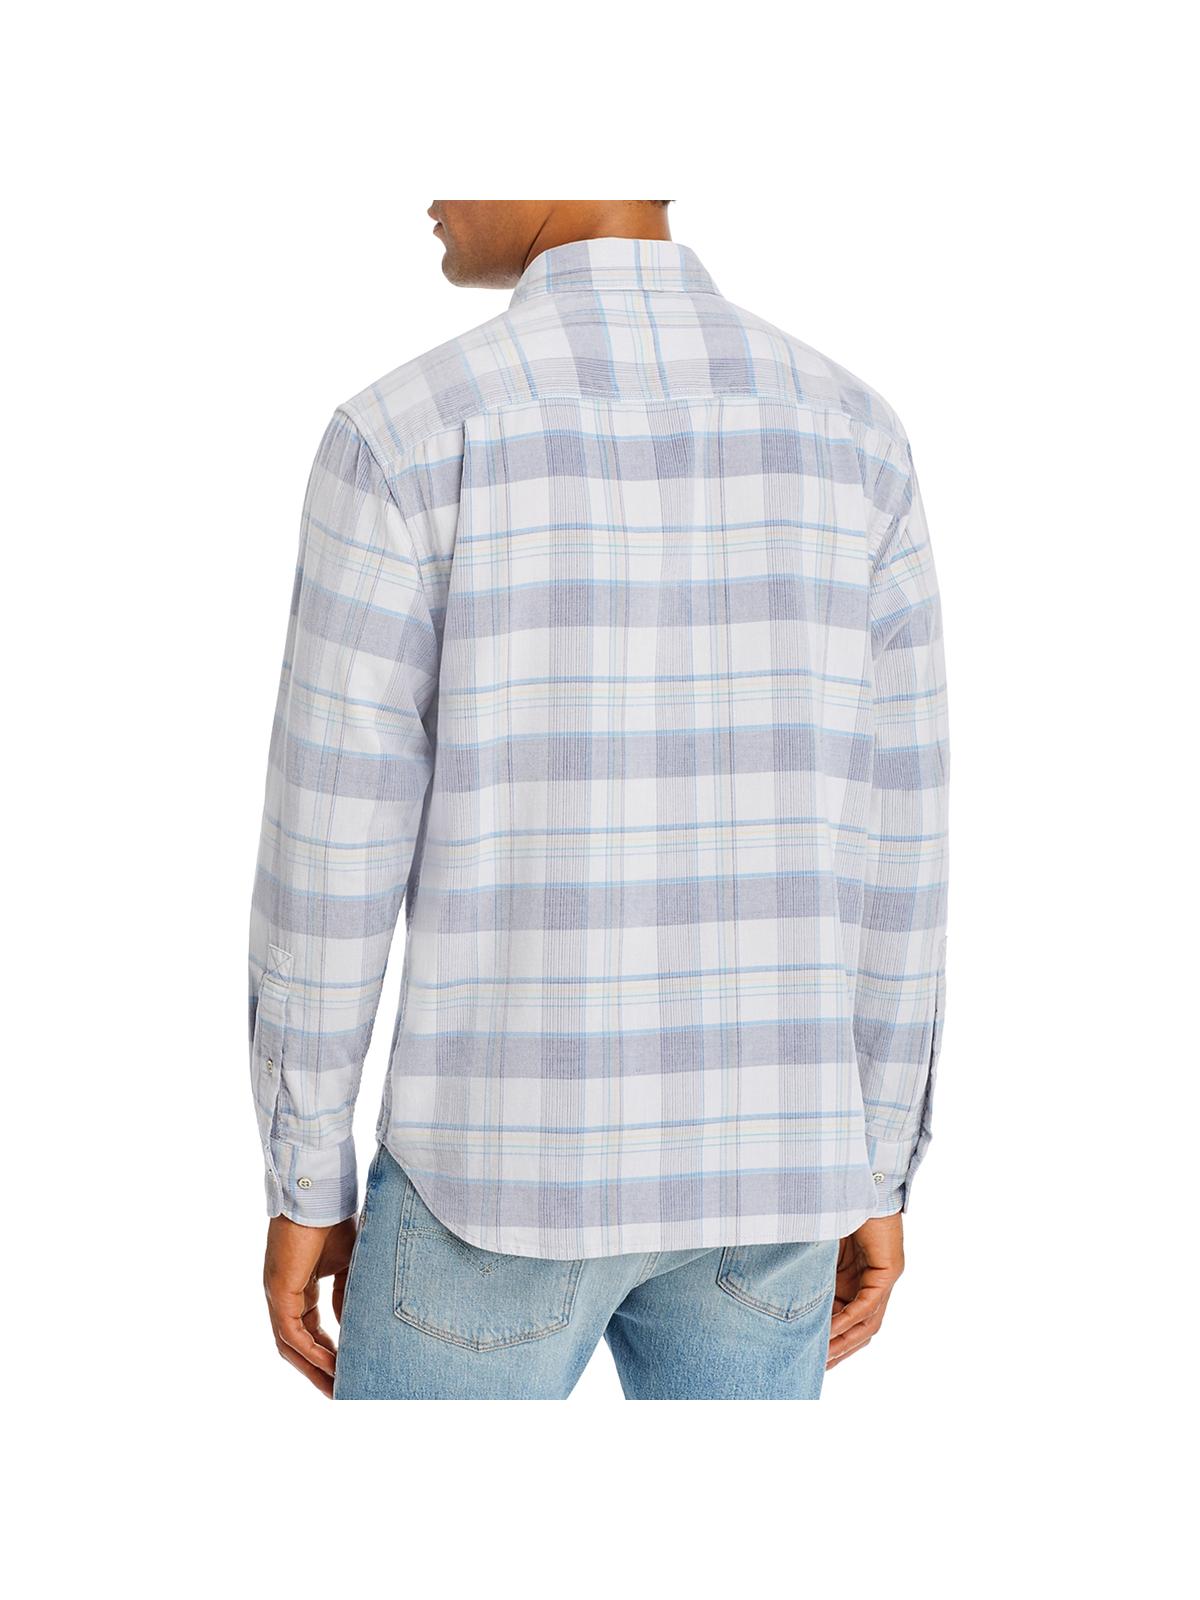 Tommy Bahama Men's Button up Plaid Print Shirt Gray Size Medium